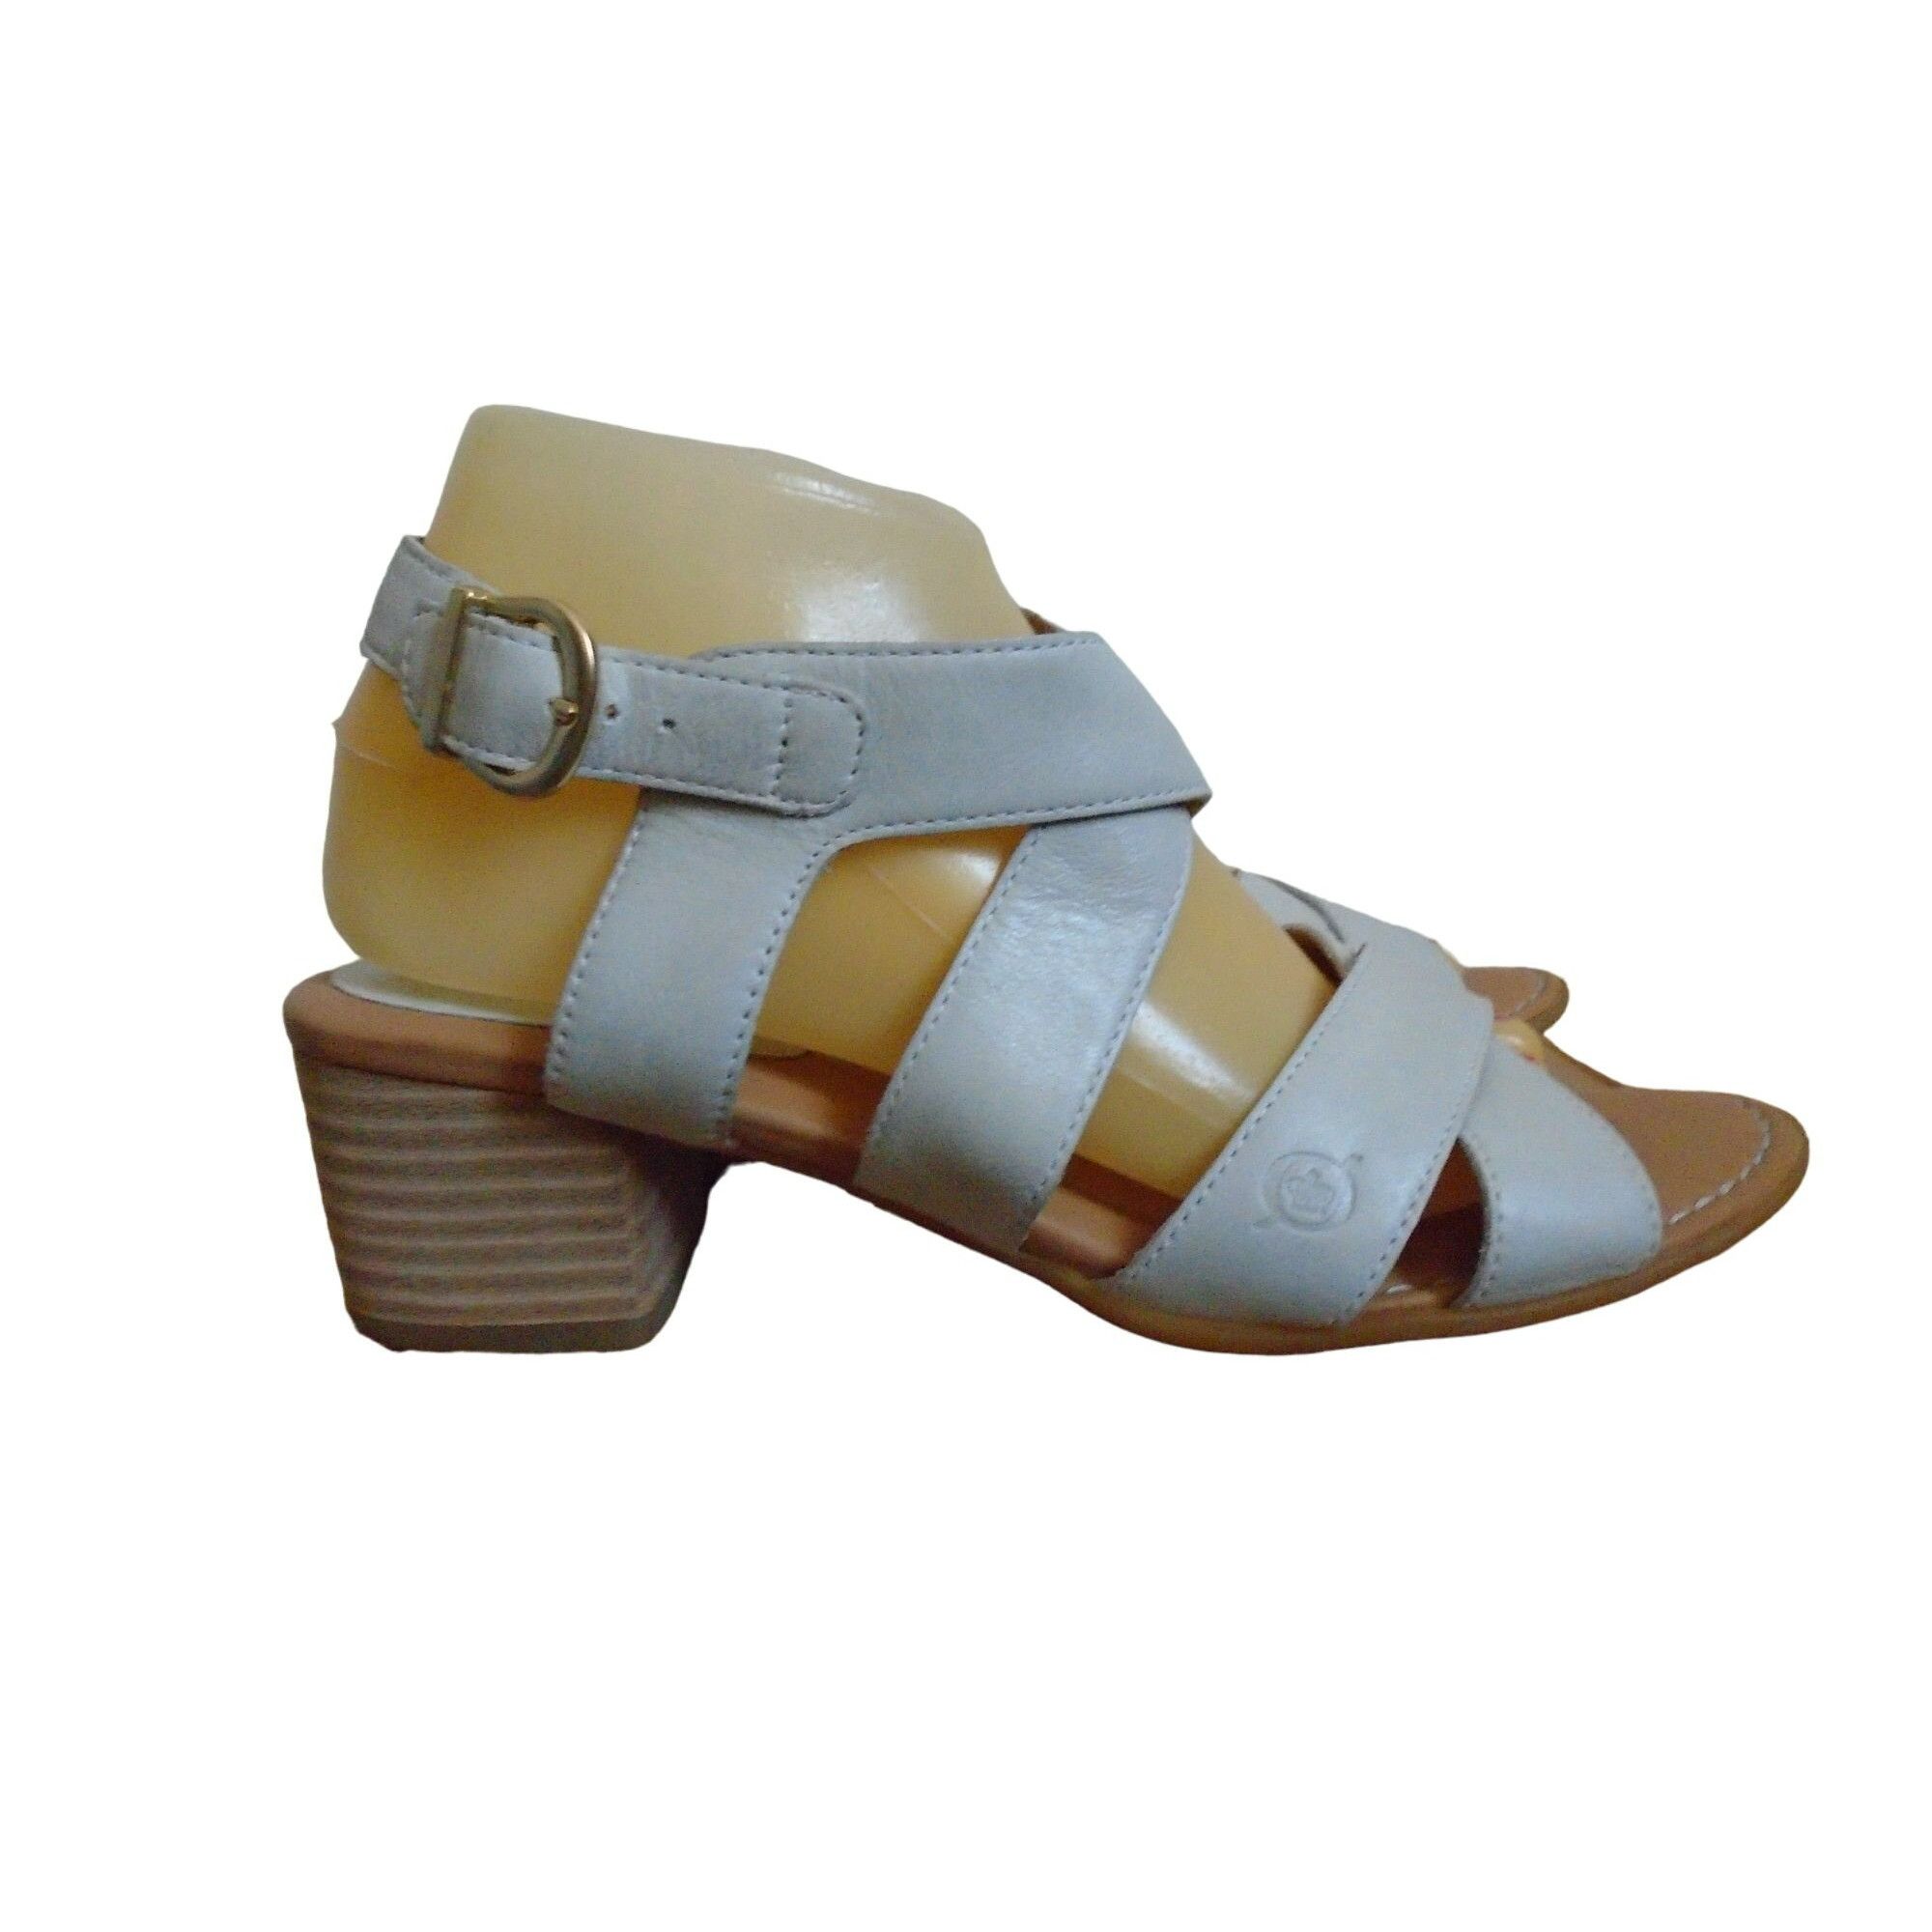 Born Born Leather Women's White Leather Sandals - 9 - New Size US 9 / IT 39 - 5 Thumbnail